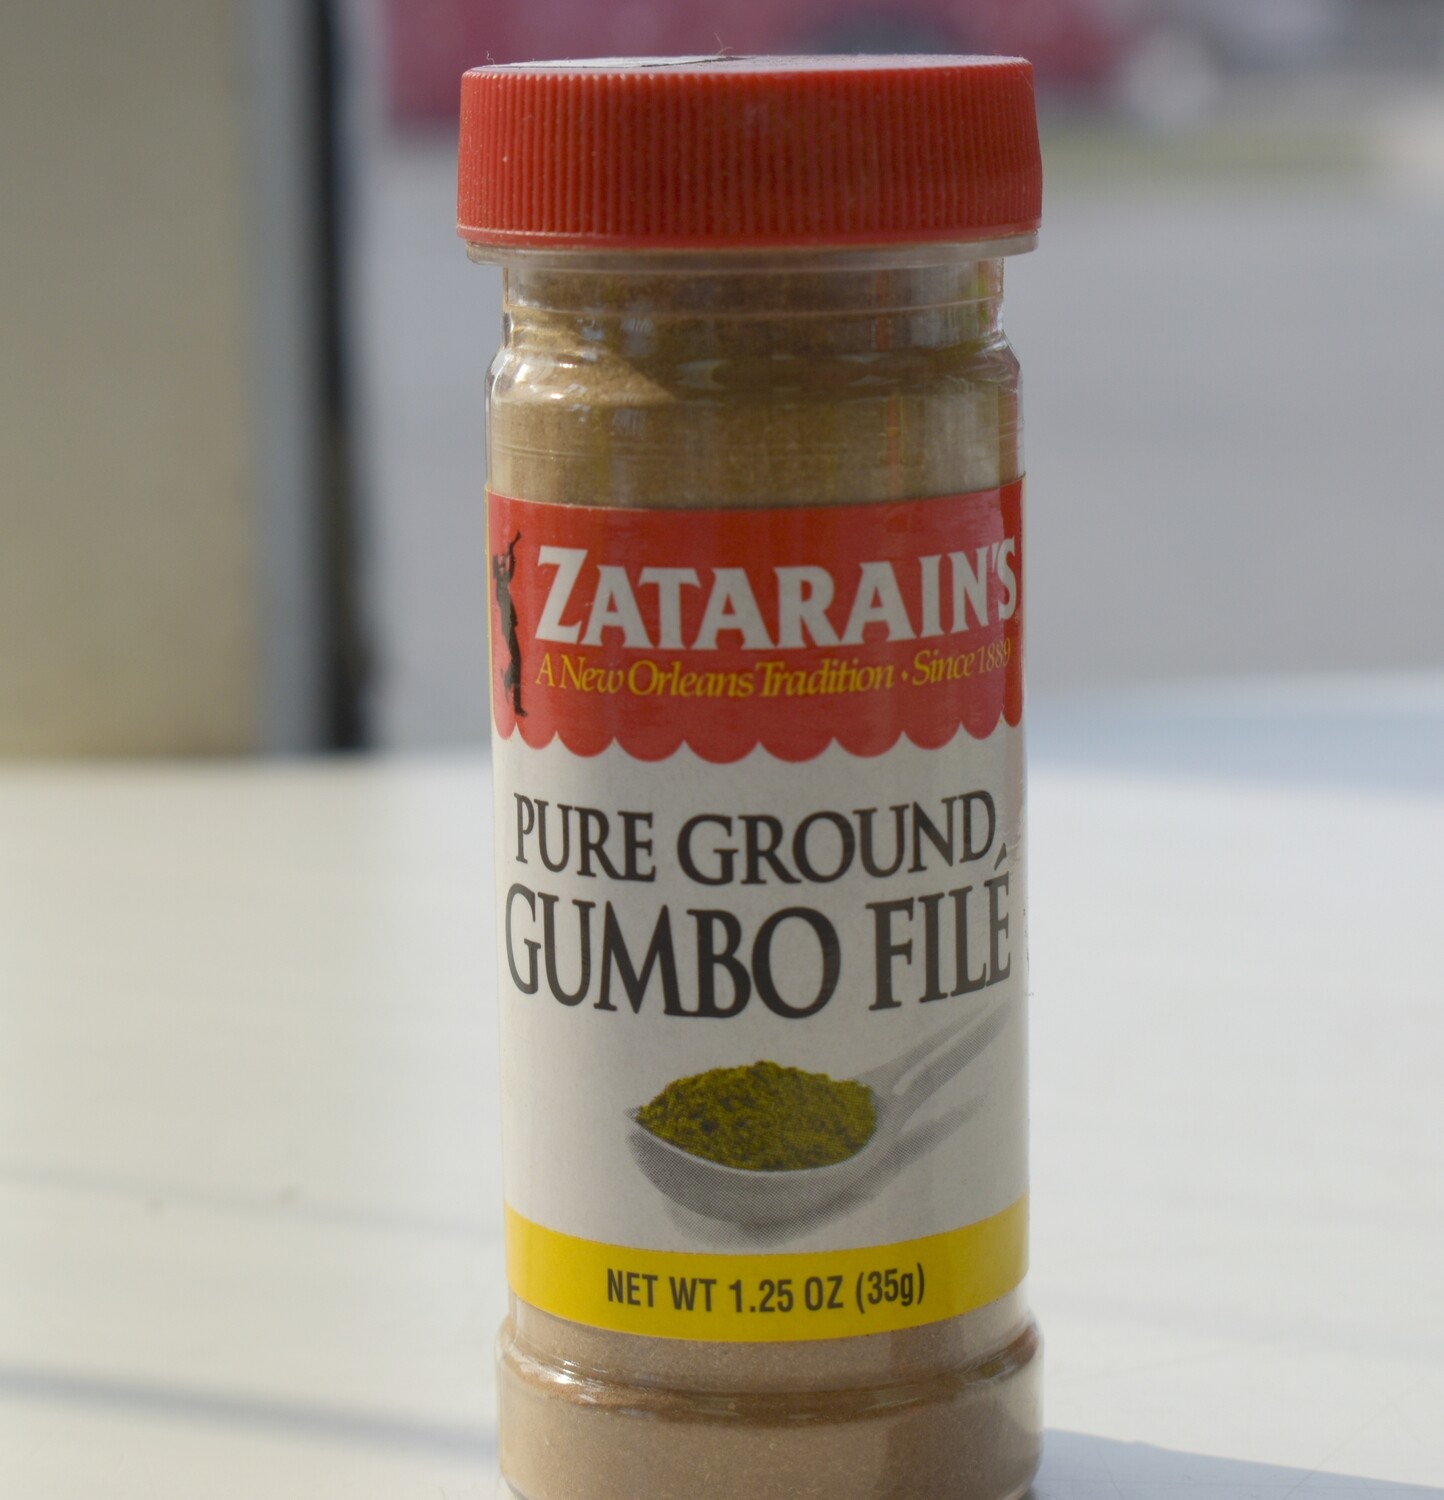 3 Zatarains Pure Ground Gumbo File' Seasoning Spice 1.25 Ounce New